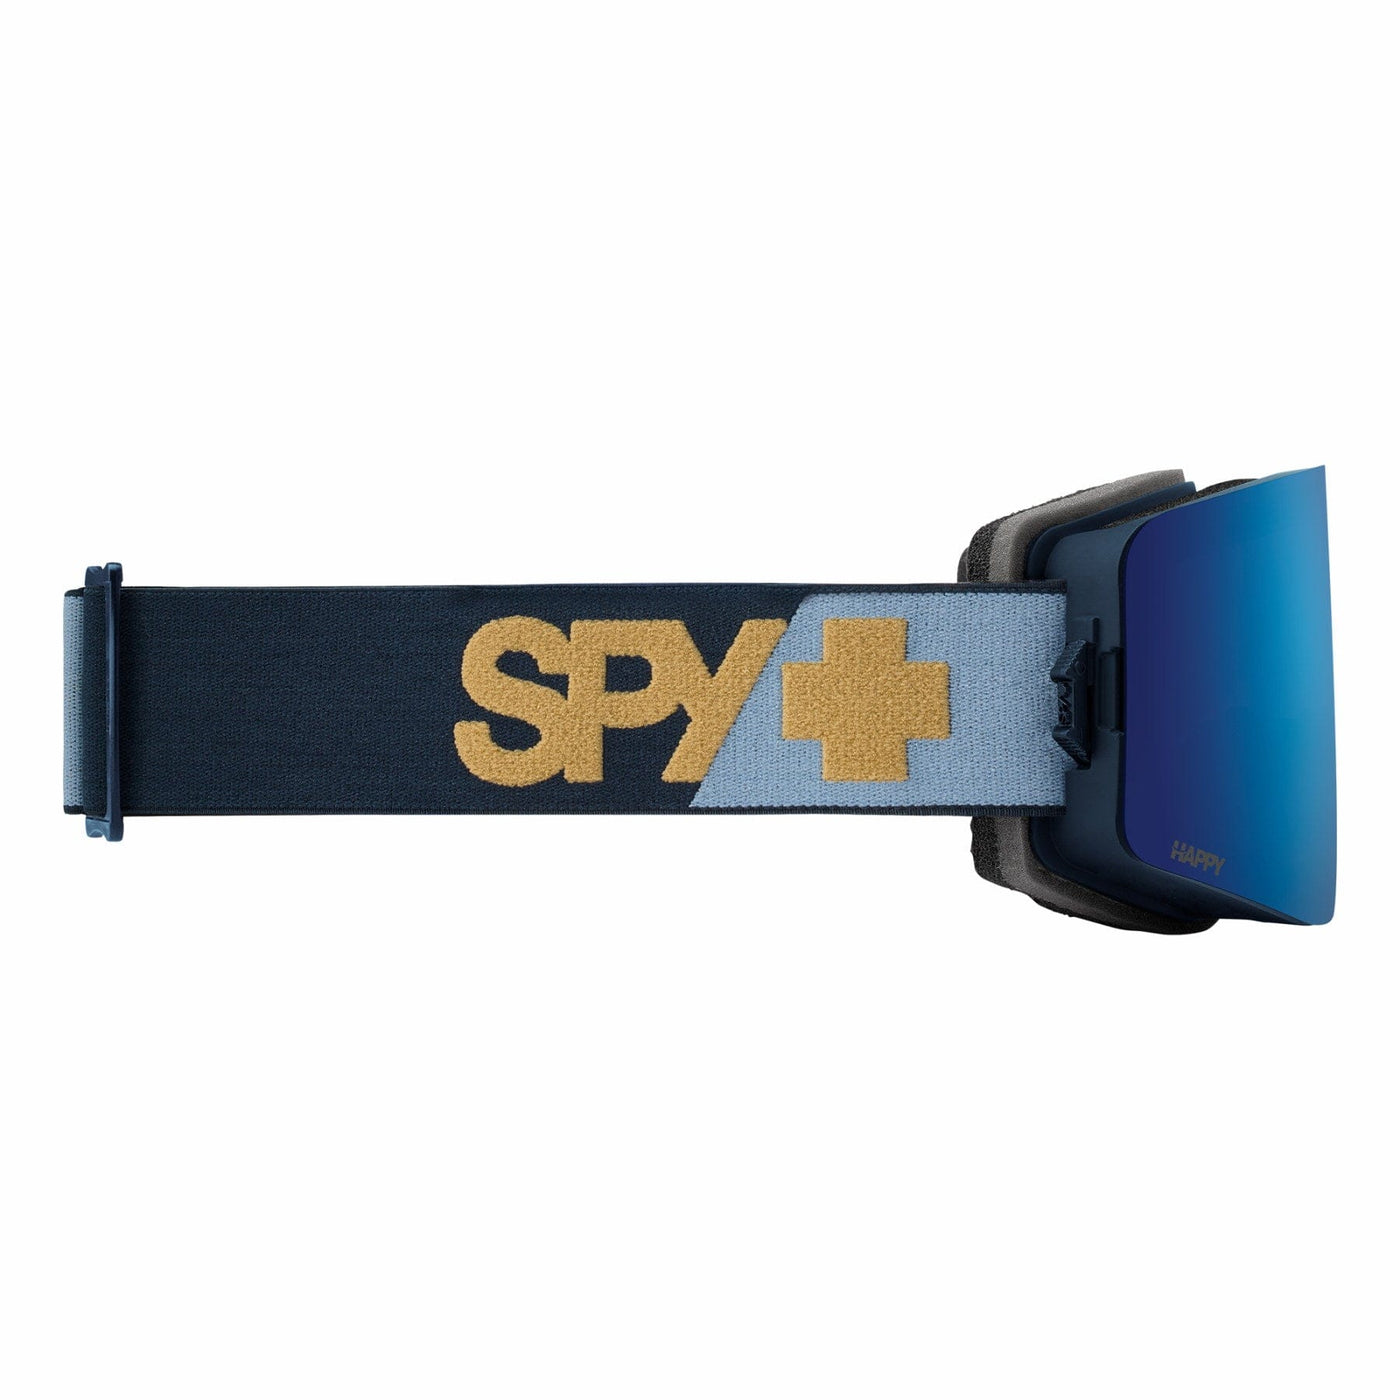 SPY Marauder SE Dark Blue Snow Goggles 8Lines Shop - Fast Shipping